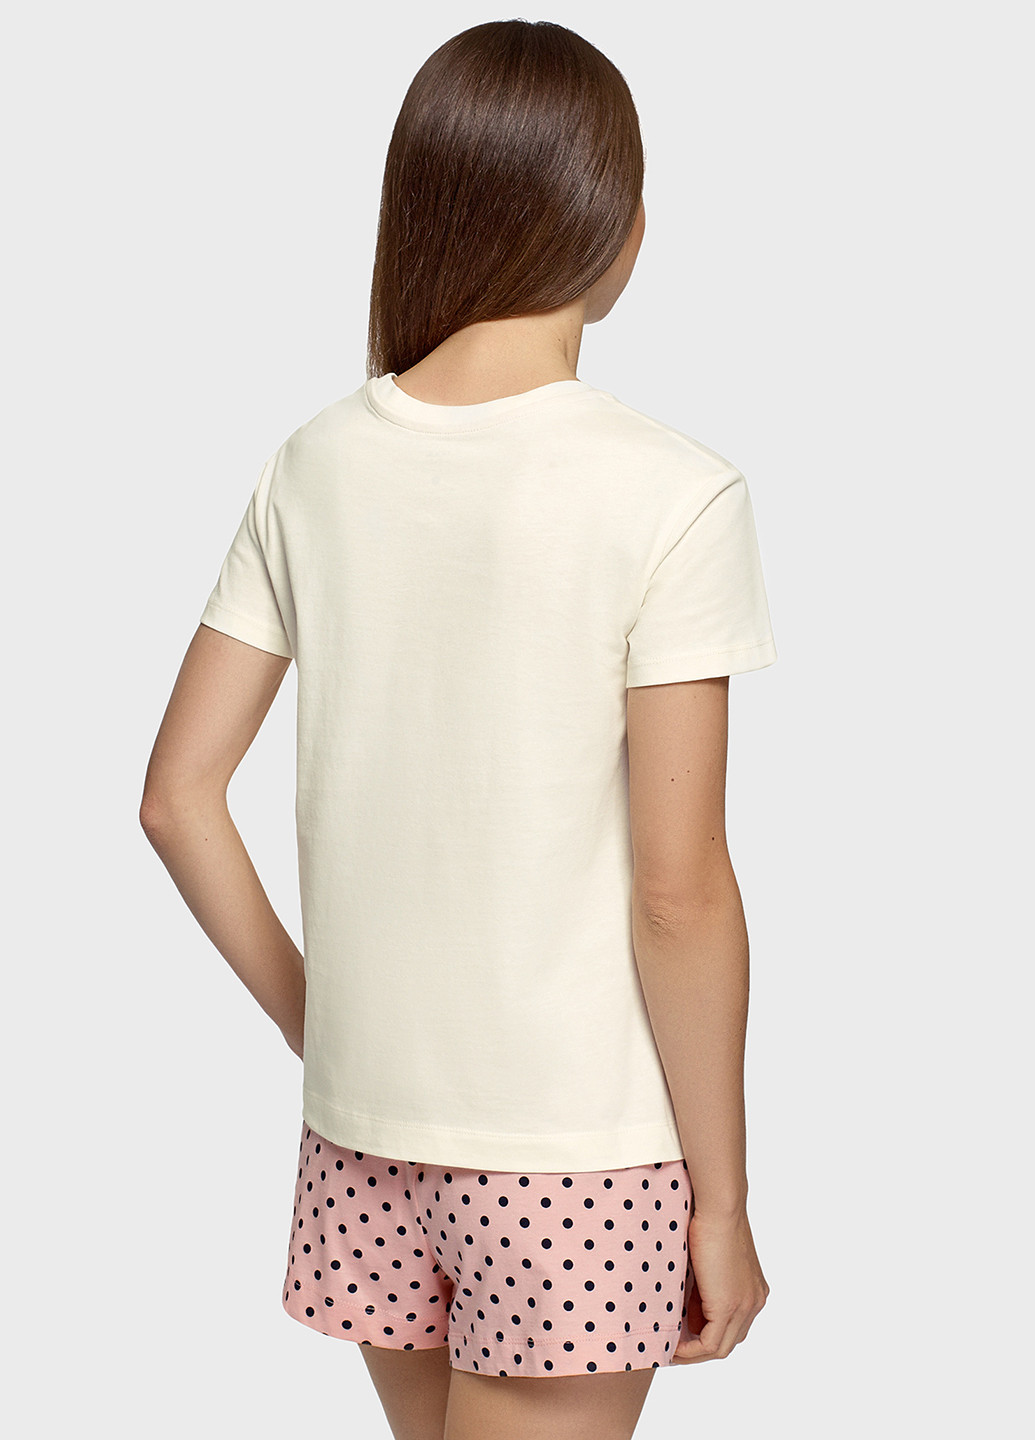 Бежевая всесезон пижама (футболка, шорты) футболка + шорты Oodji